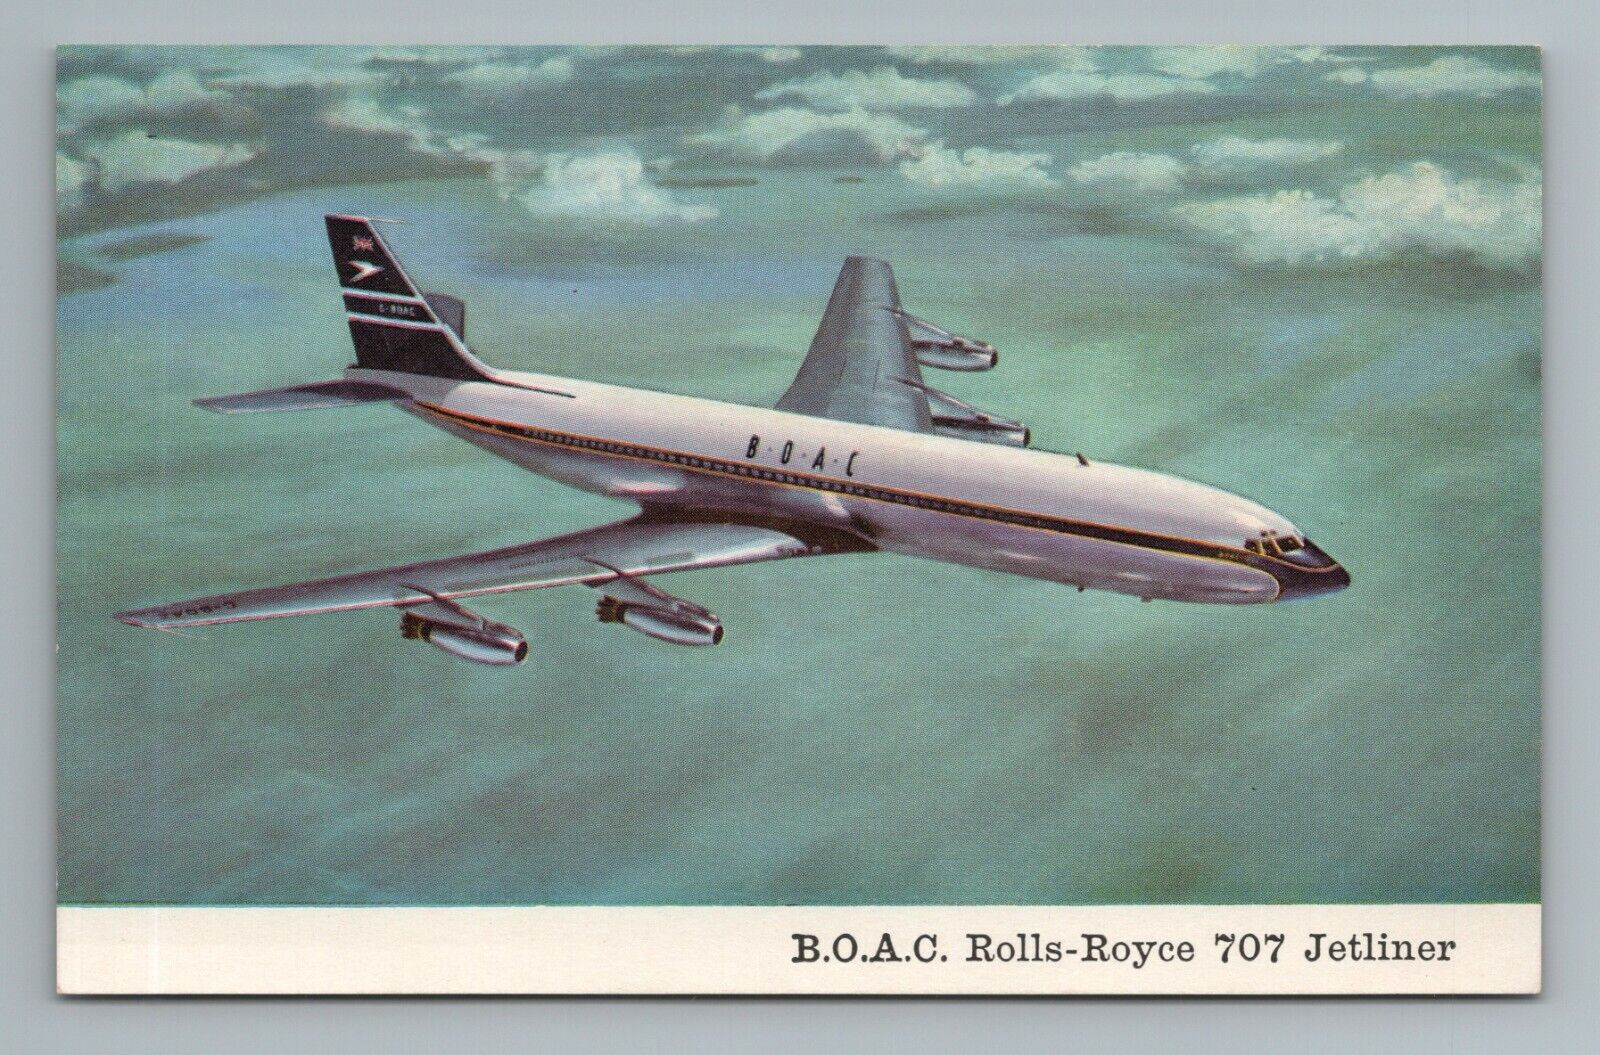 B.O.A.C. Rolls Royce 707 Jetliner, BOAC, Airplane Postcard